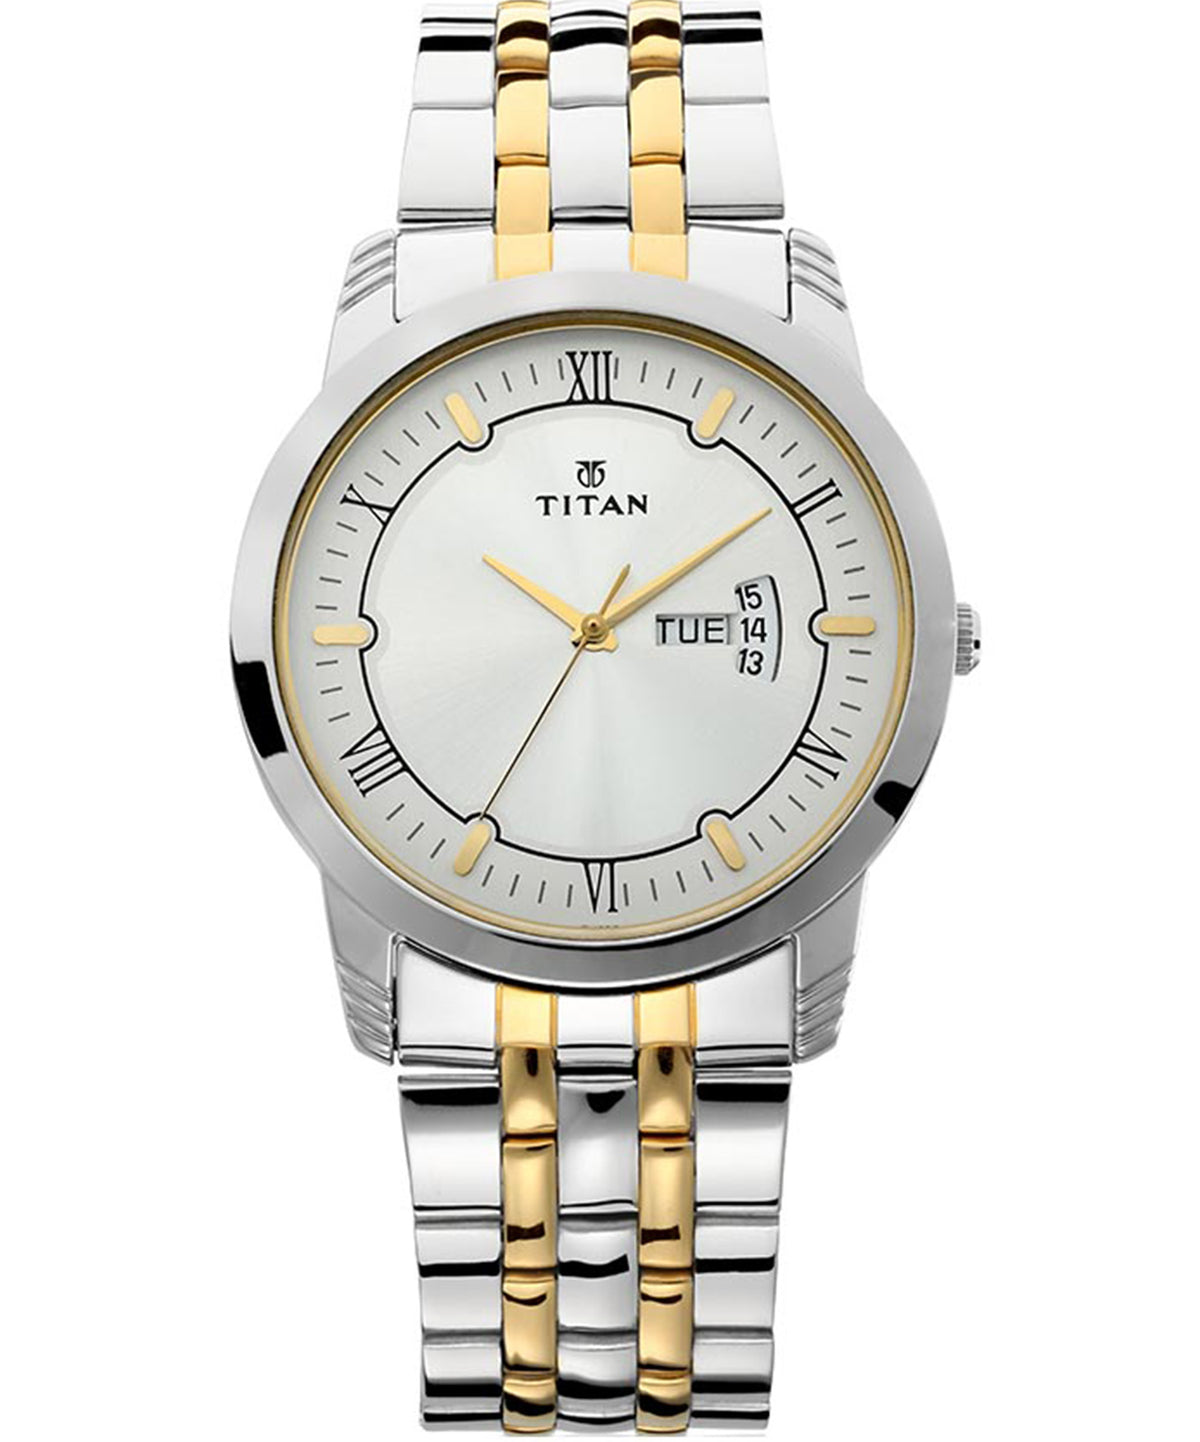 Titan Men's Watch Silver Dial Silver & Gold Stainless Steel Strap Watch, 1774BM01